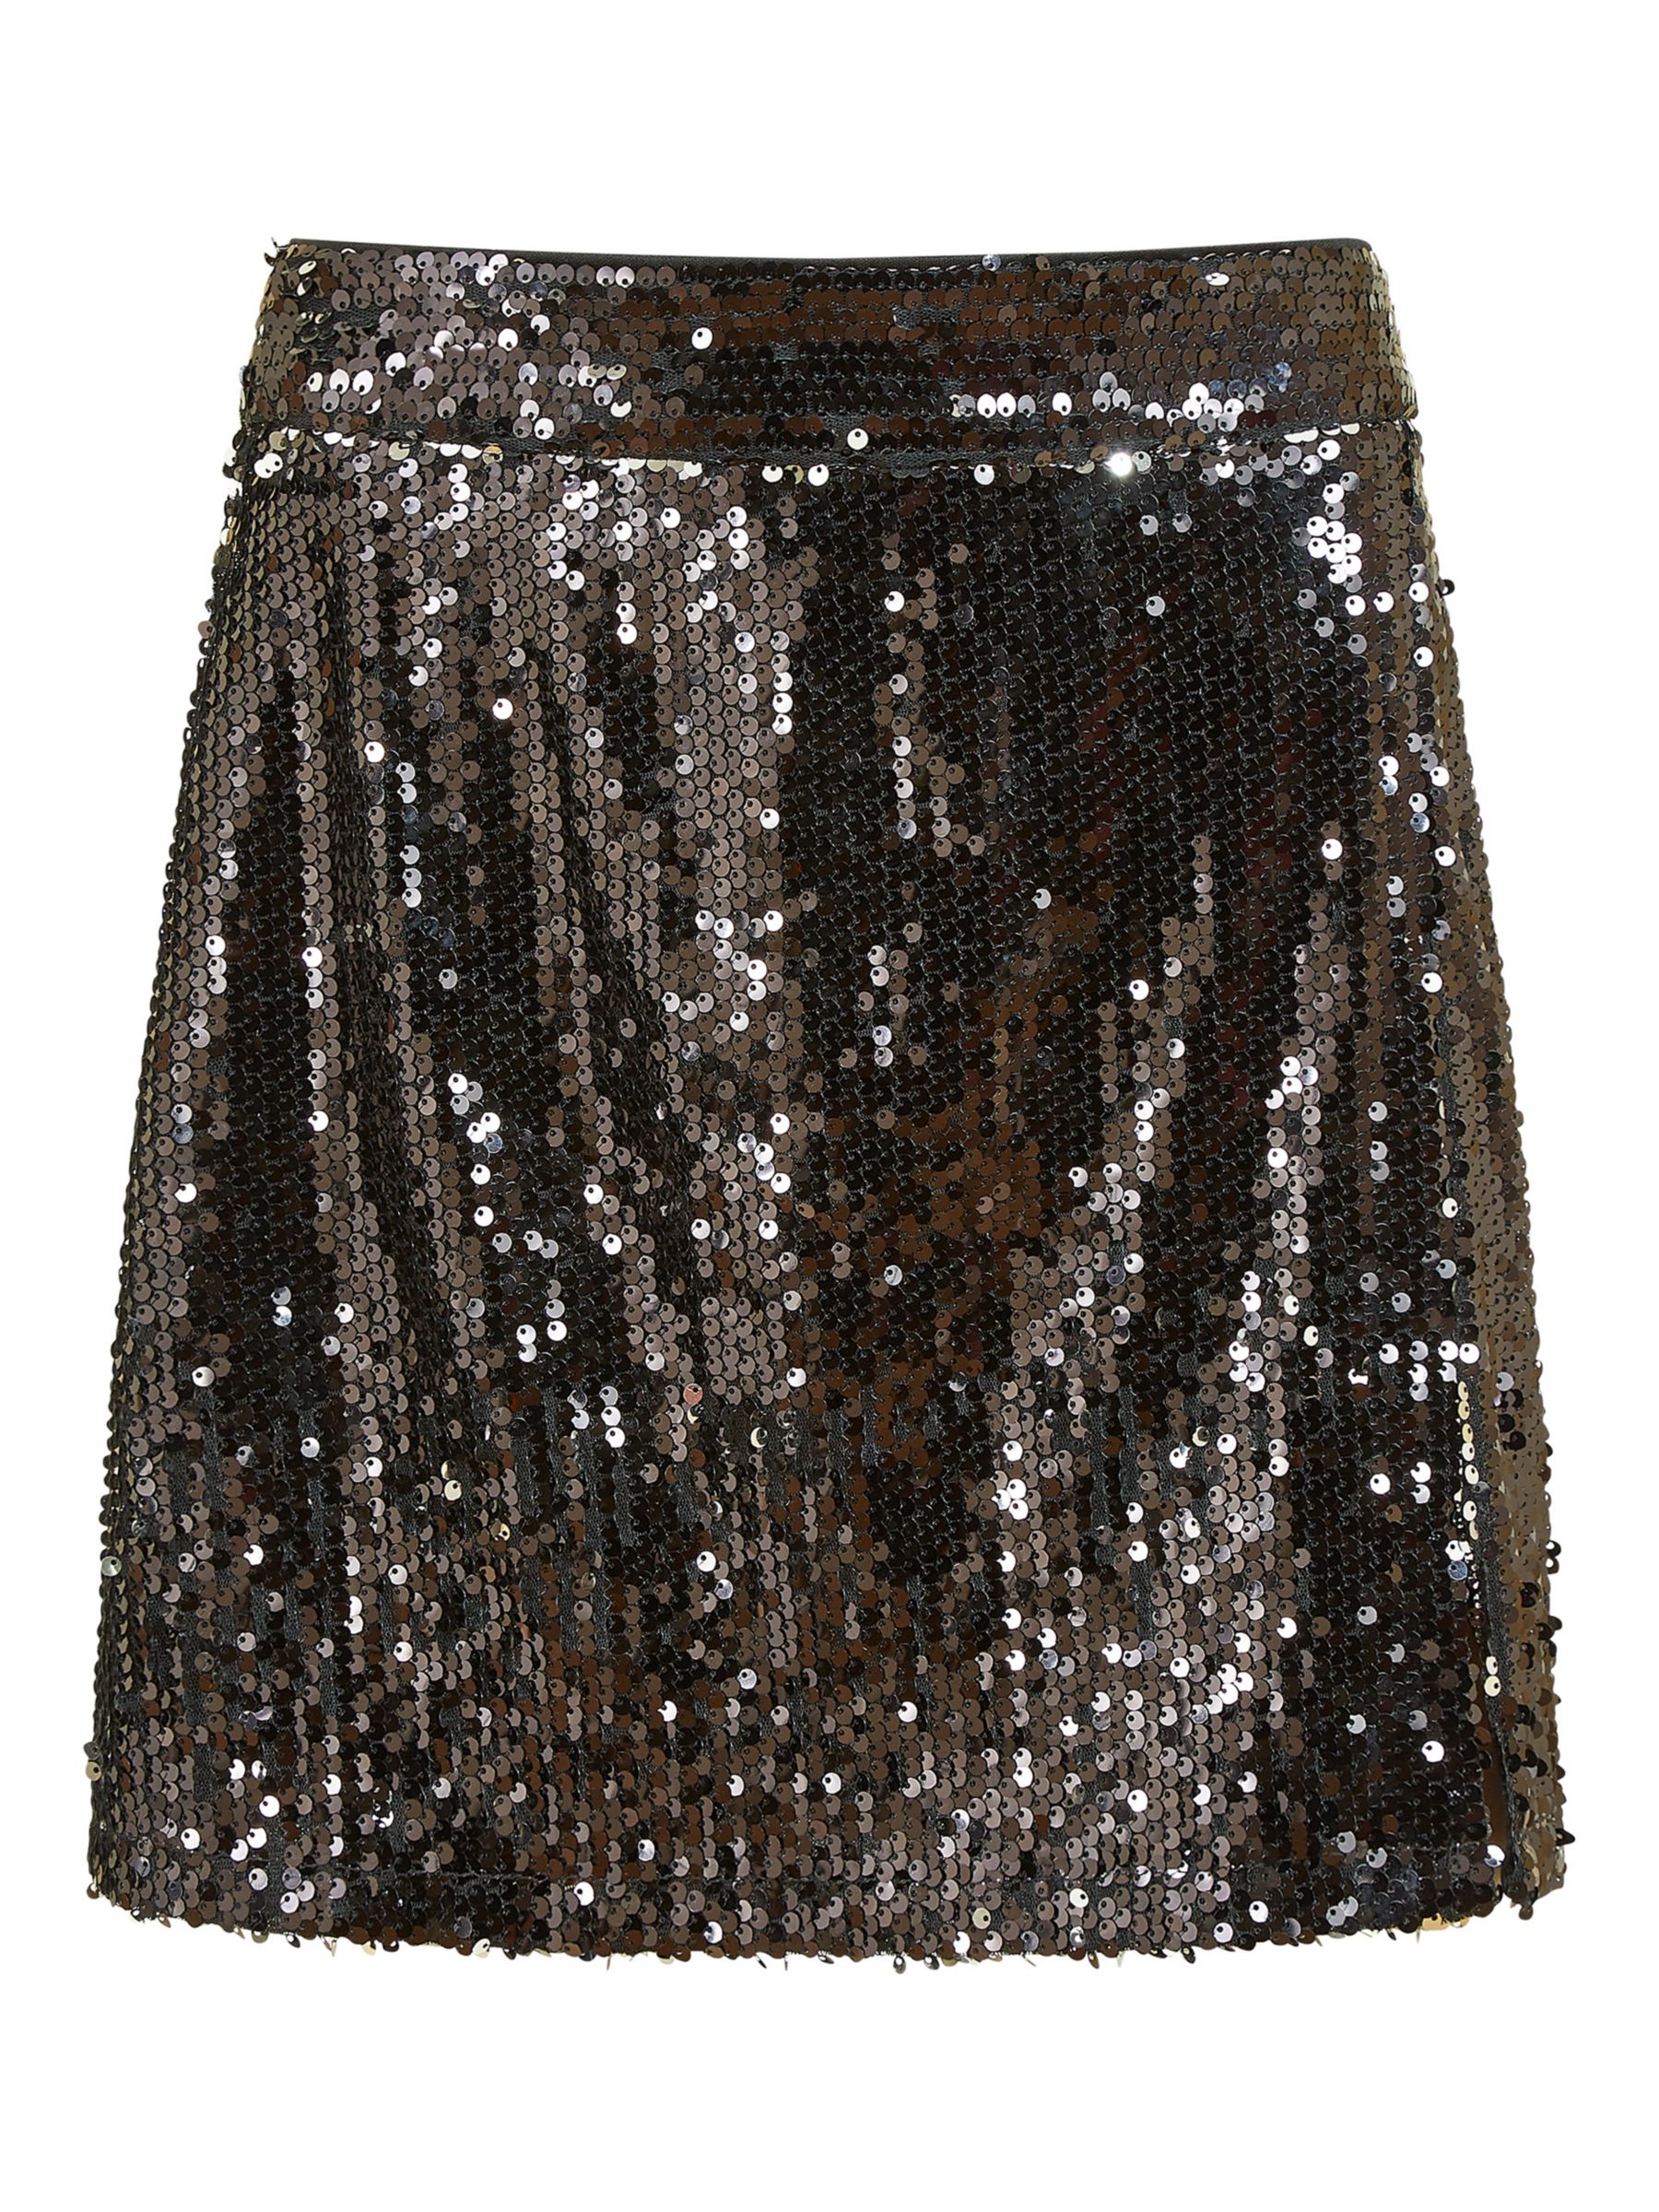 Mela London Sequin Mini Skirt, Black at John Lewis & Partners